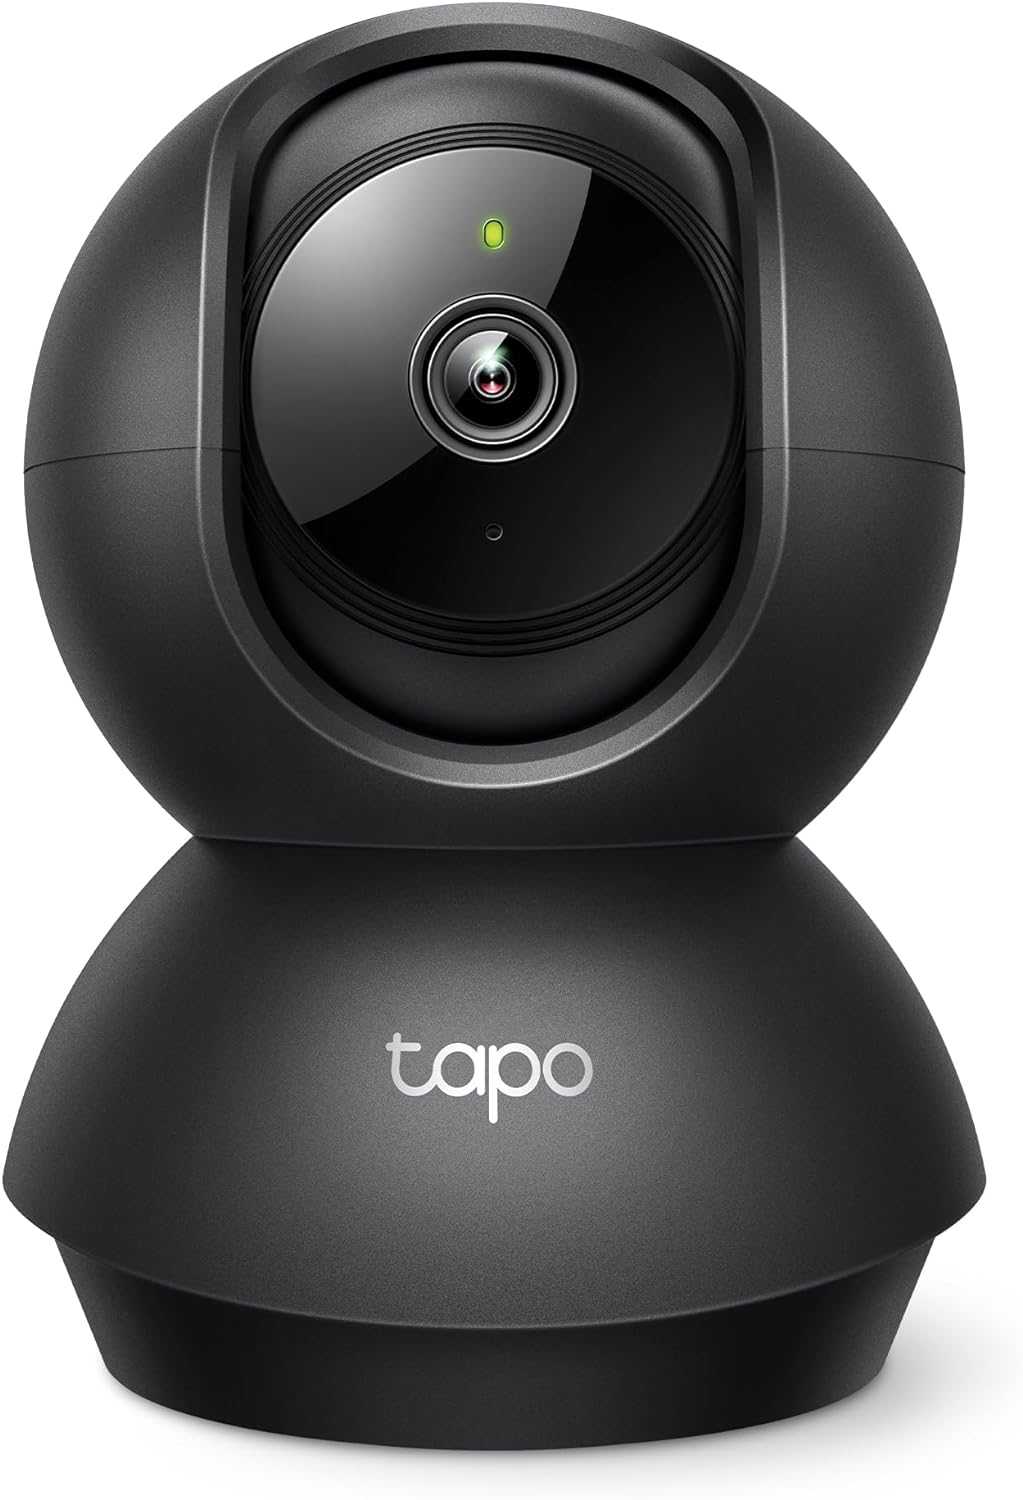 TP-Link Tapo C211 Pan/Tilt Home Security Wi-Fi Camera